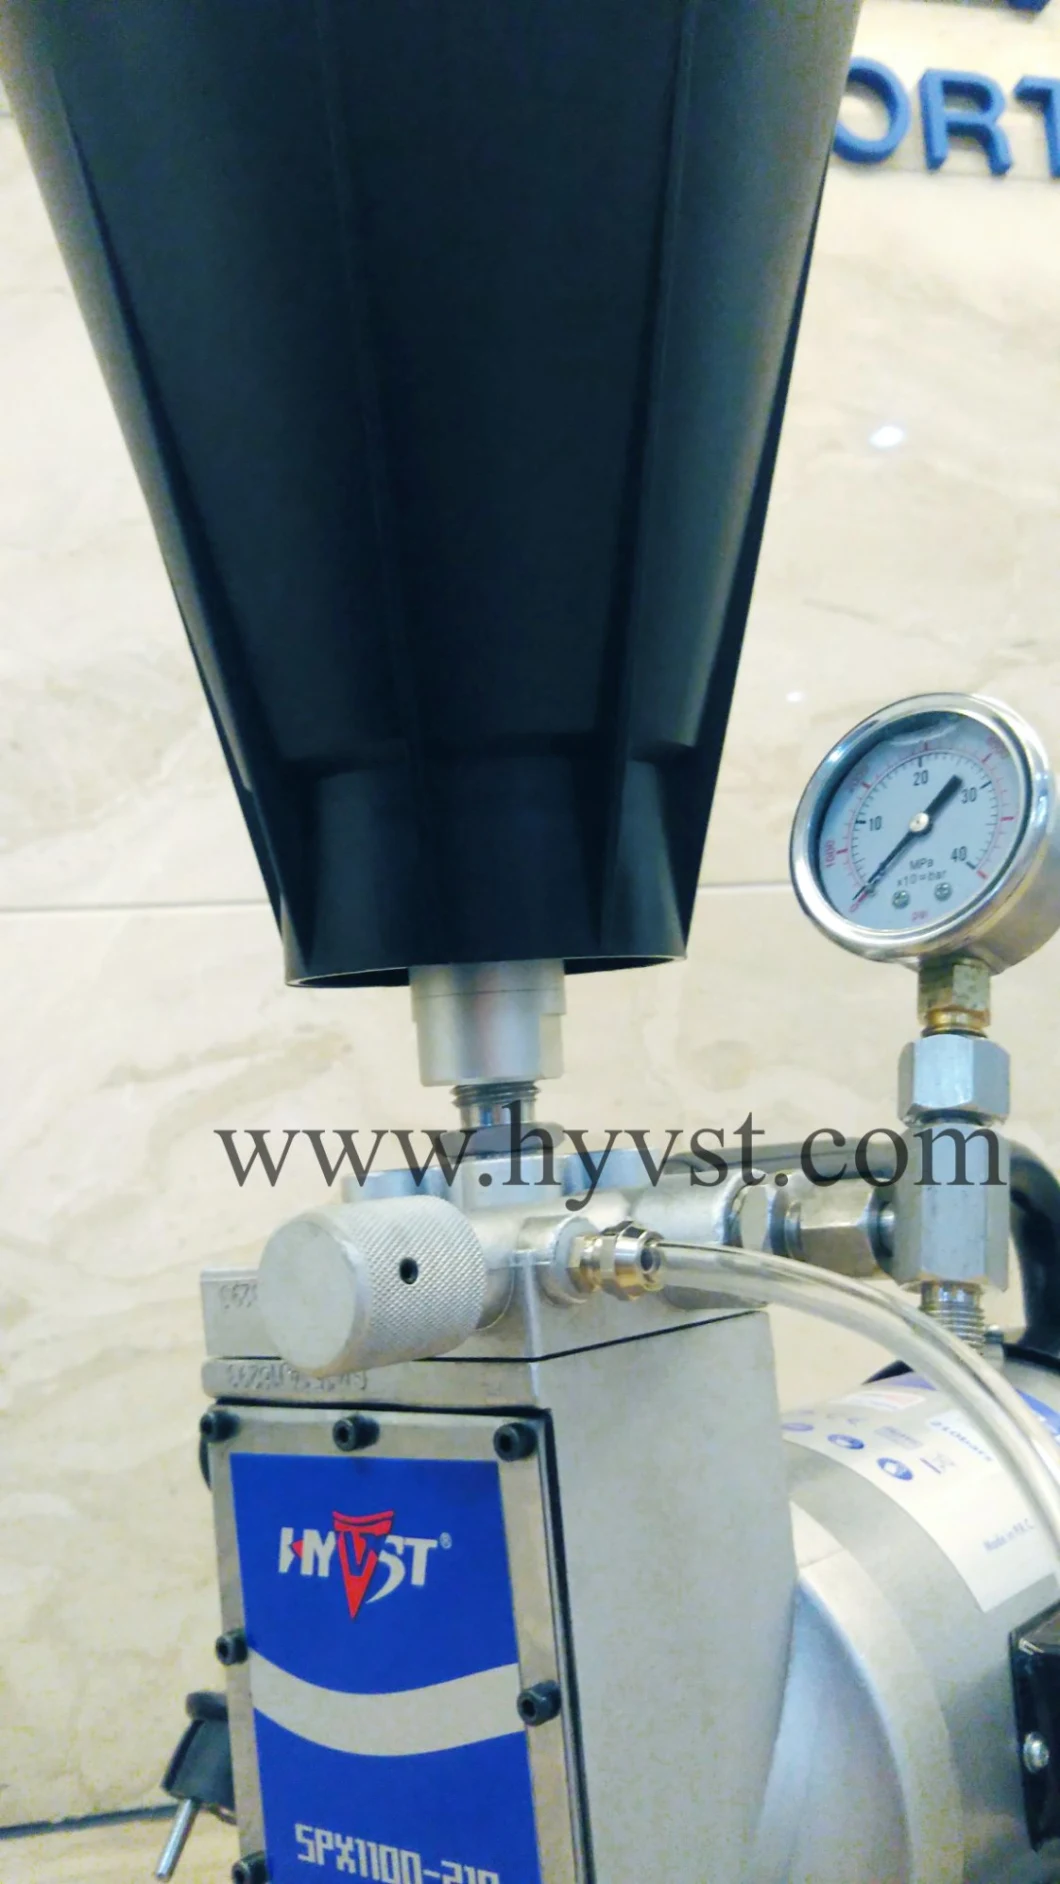 Hyvst Electric High Pressure Airless Paint Sprayer Diaphragm Pump Spx1100-210h